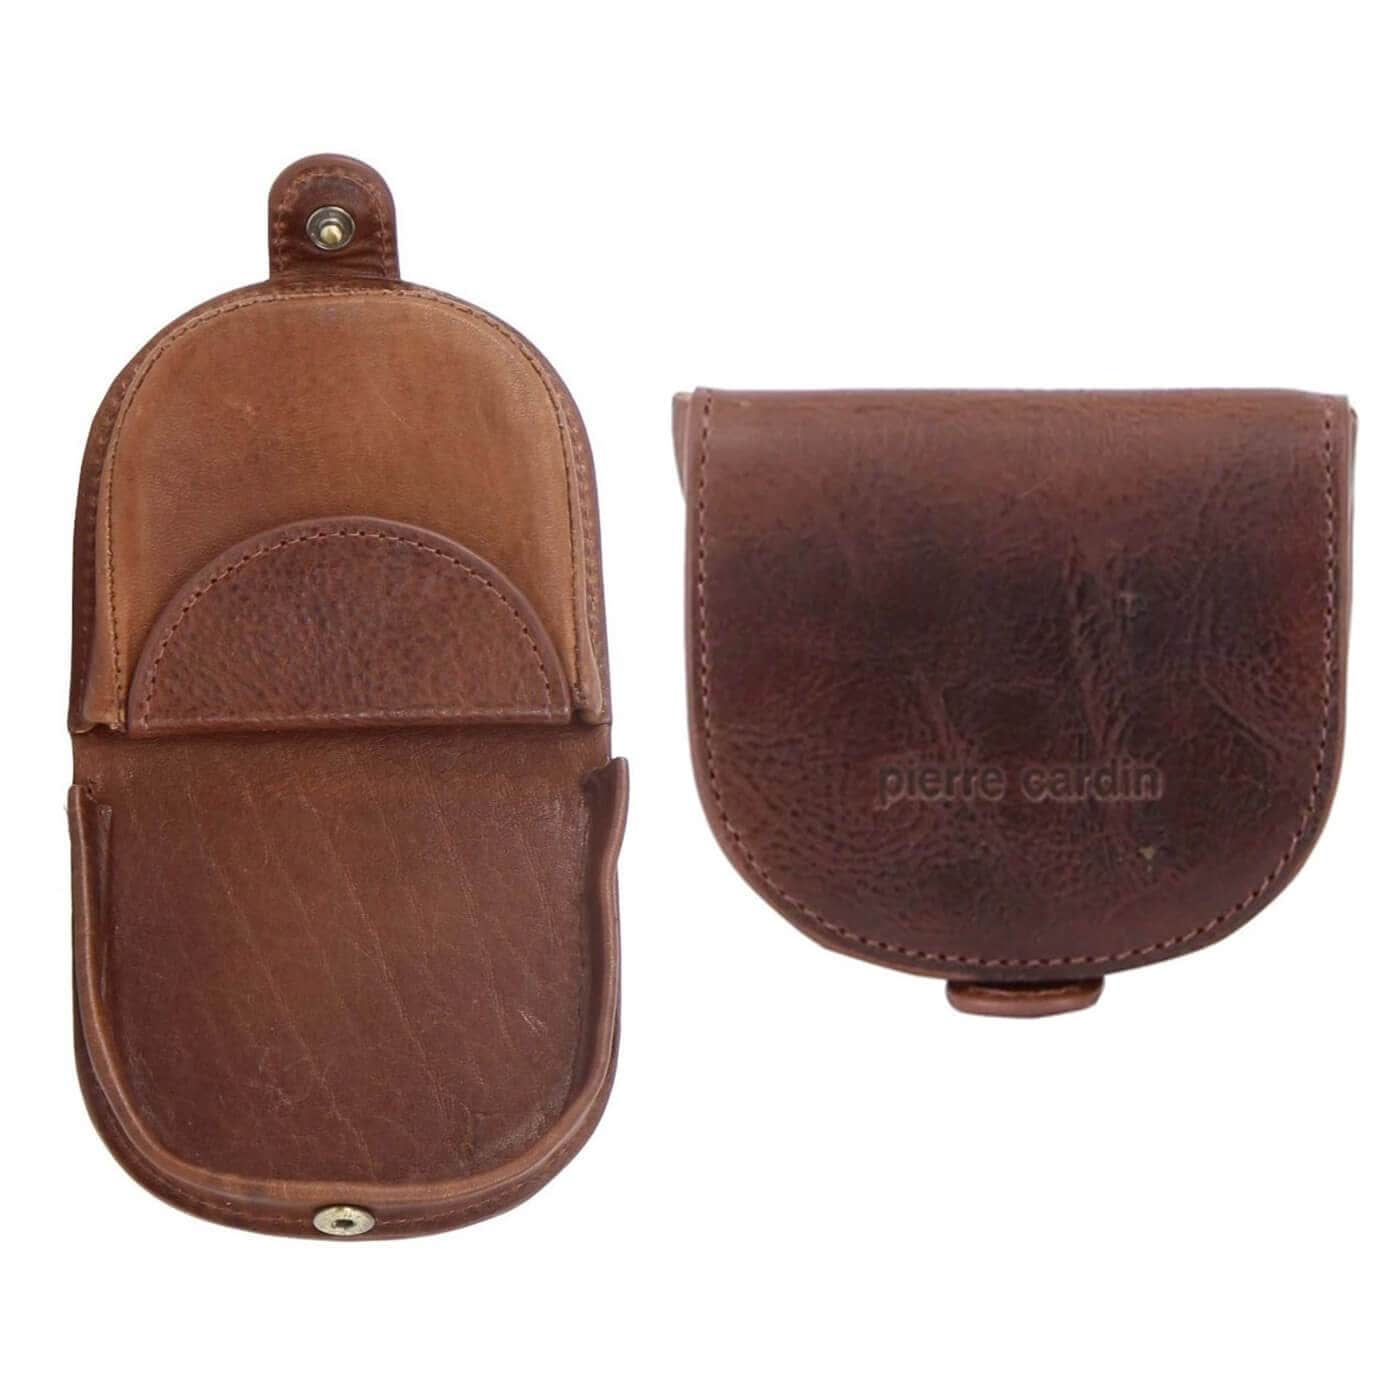 Pierre Cardin | Pierre cardin, Vintage purse, Clutch bag